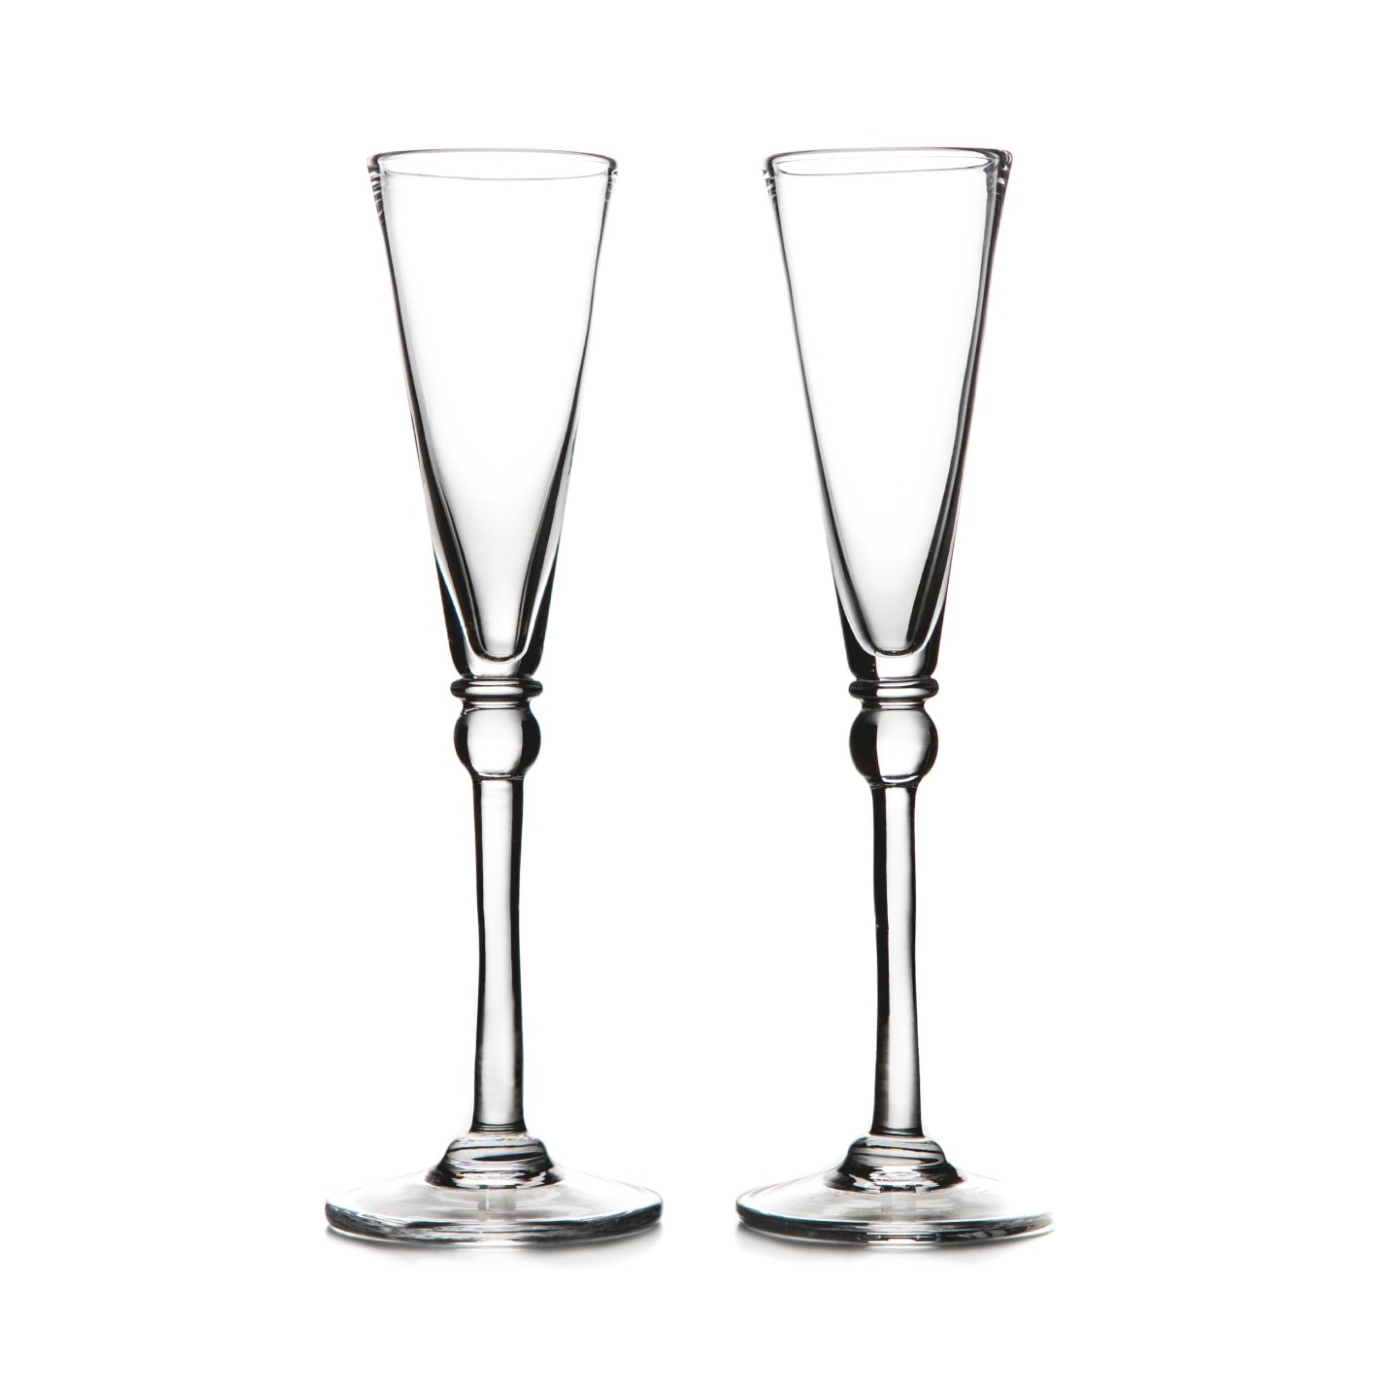 22 Inch Decorative Short Stem Glass Champagne Flute Hurricane Vase